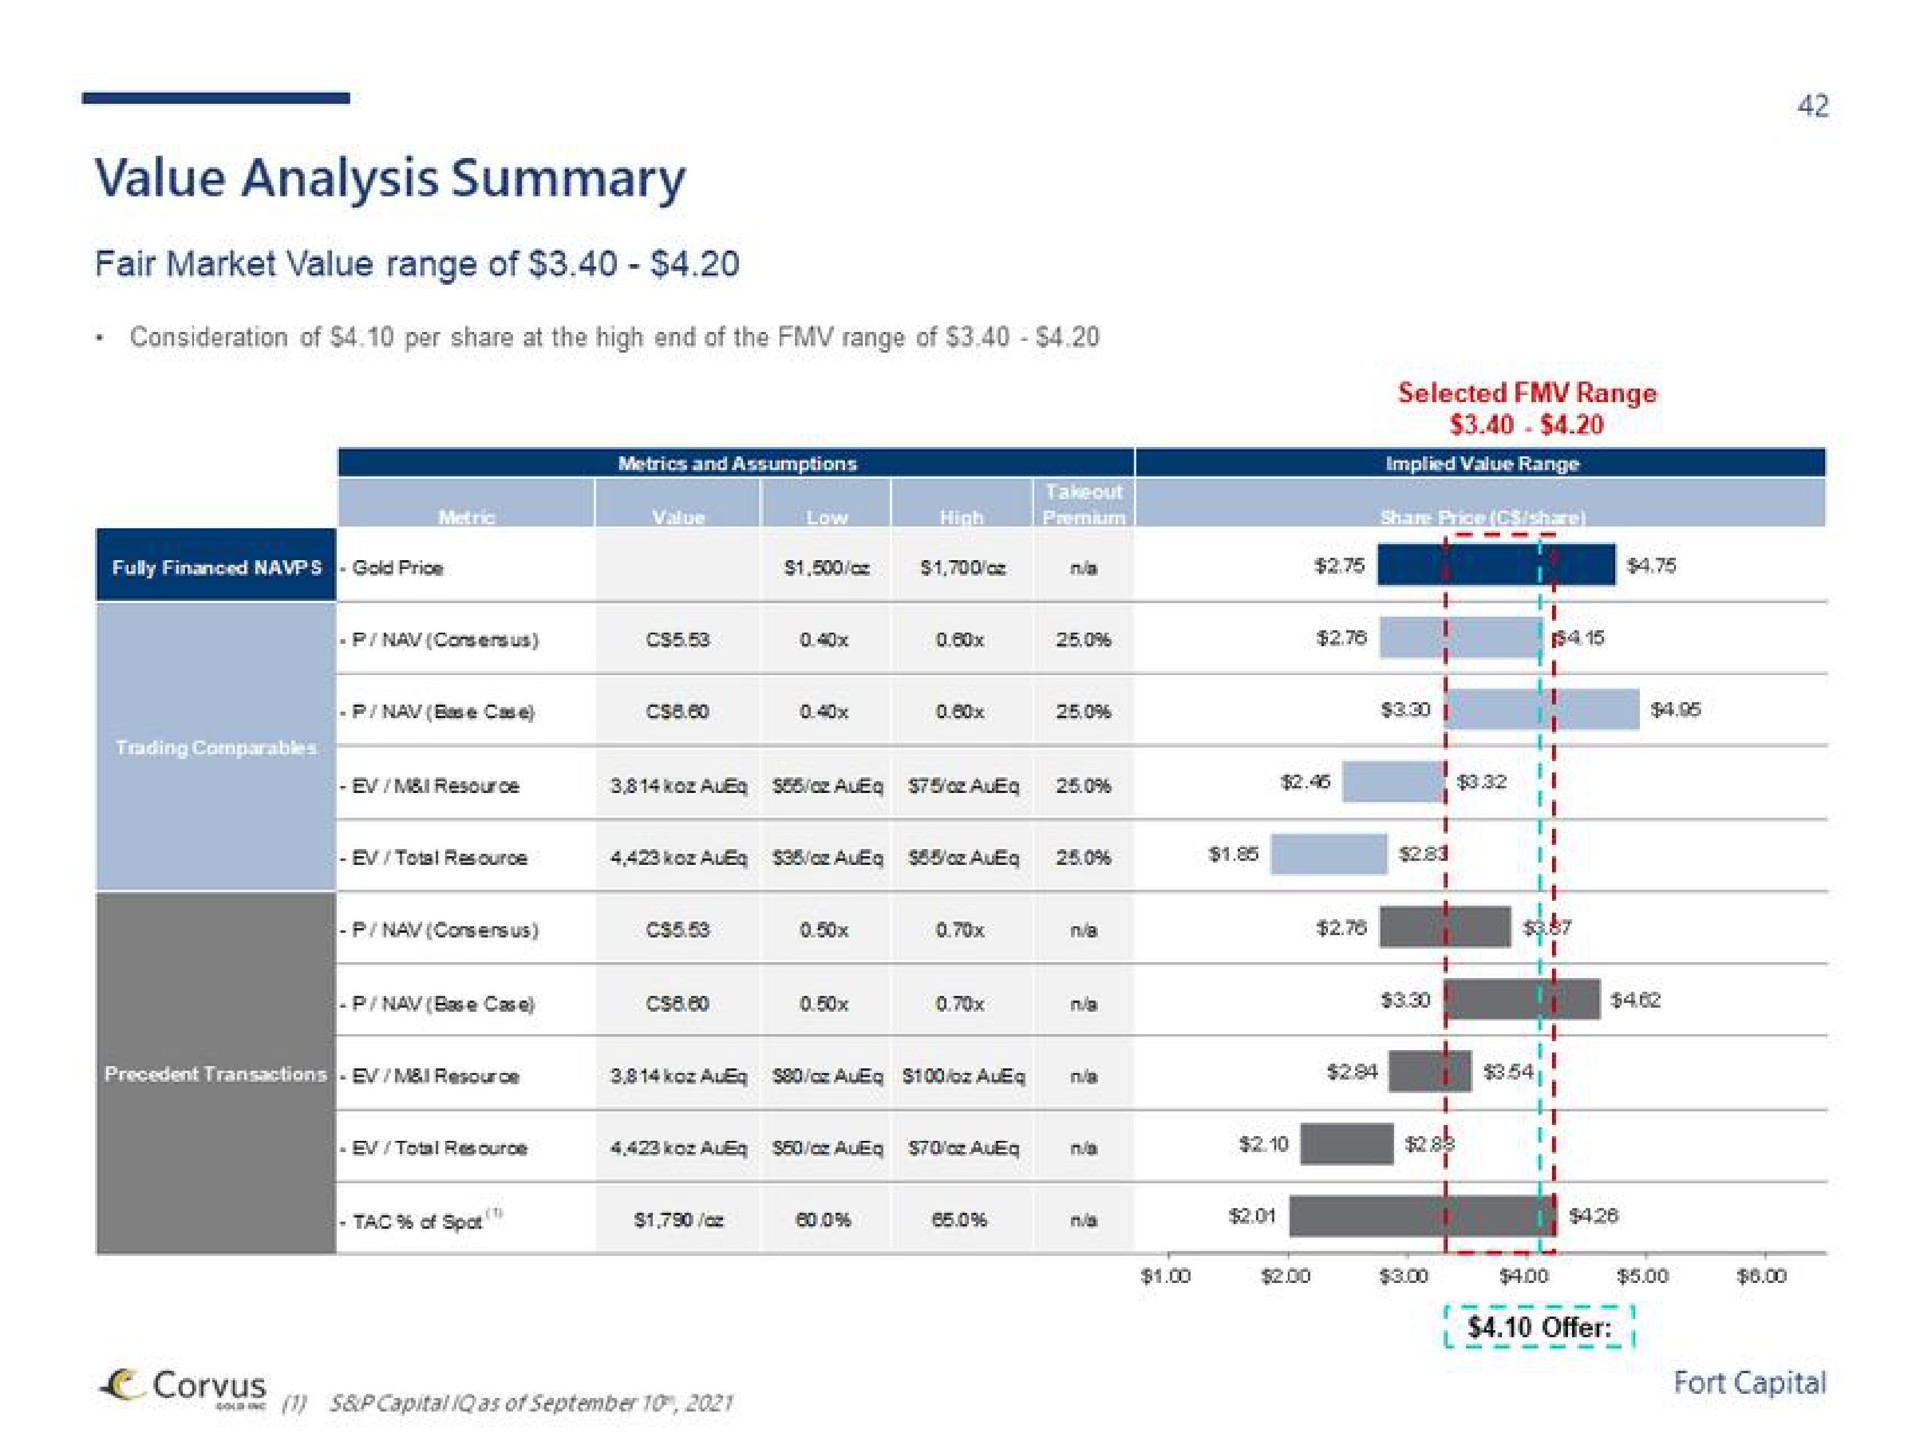 value analysis summary | Fort Capital